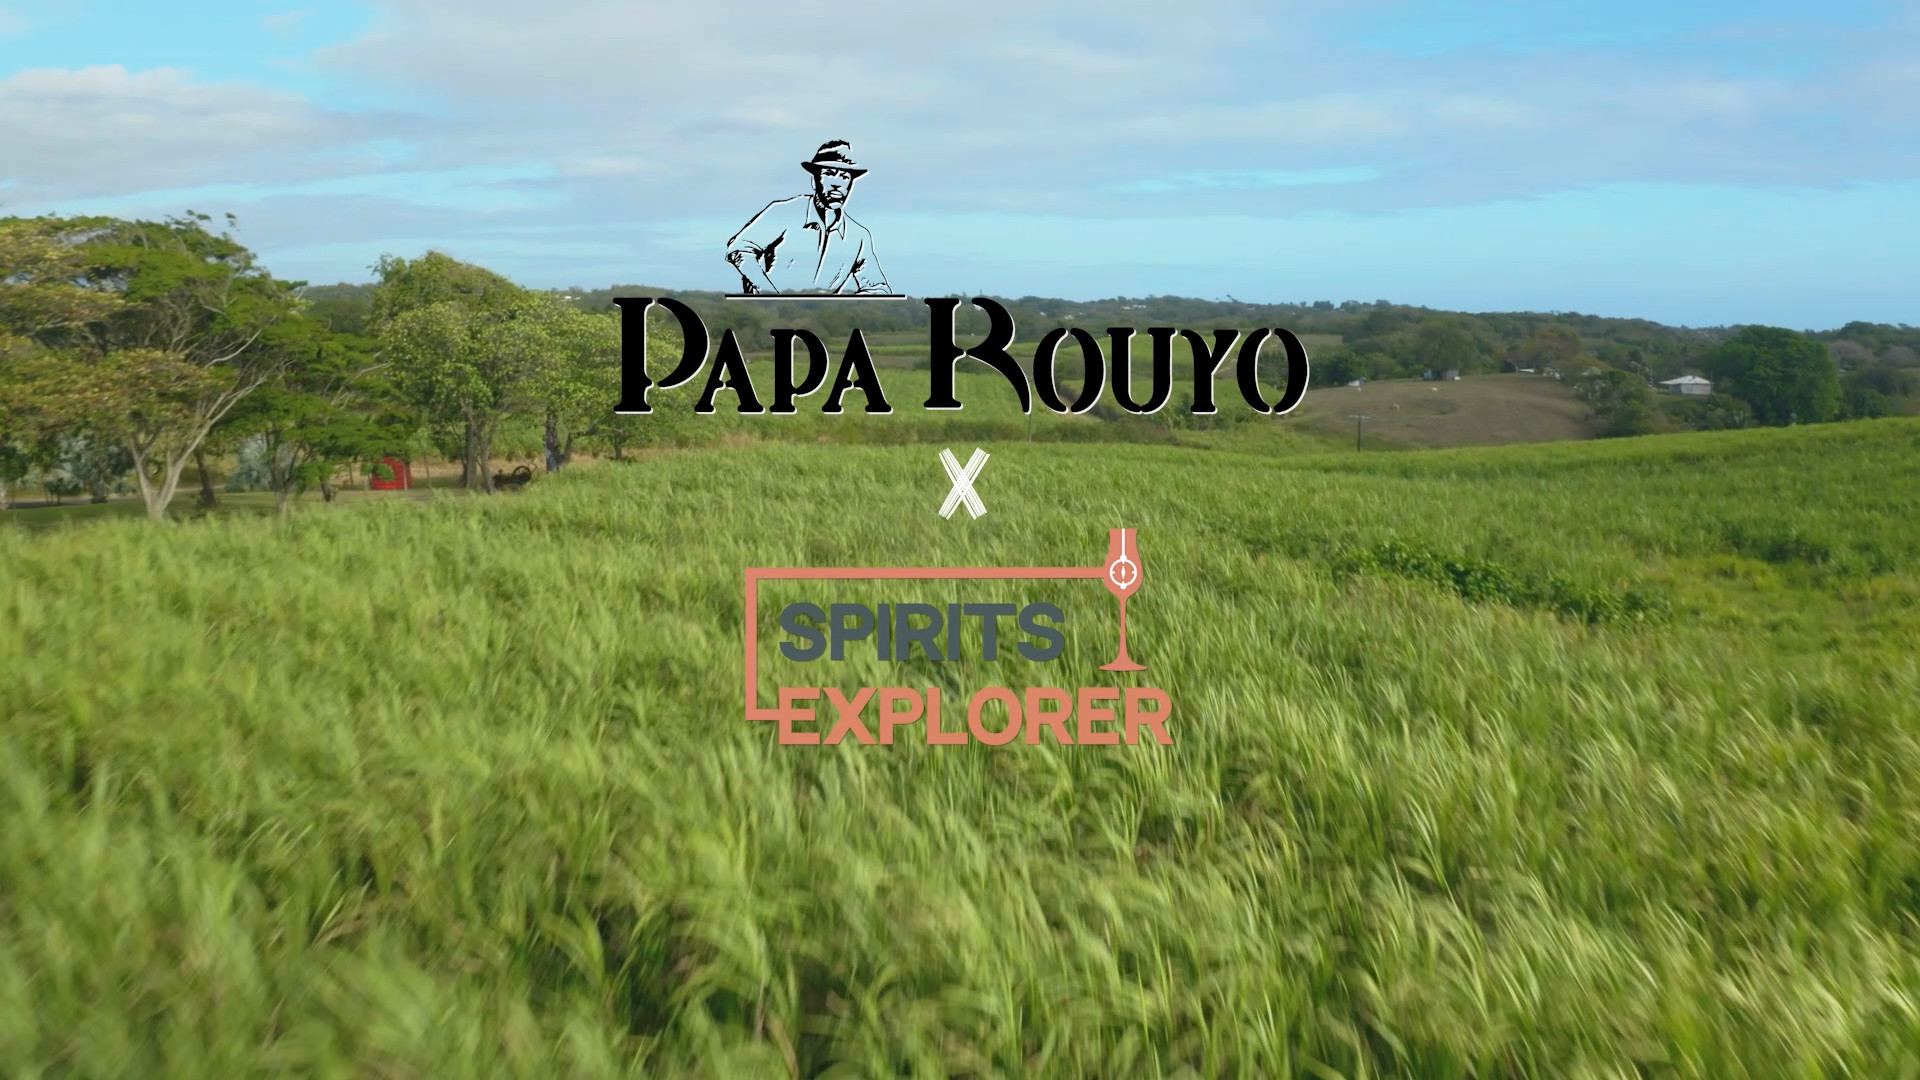 Spirits Explorer in Guadeloupe Episode 6 – Papa Rouyo distillery